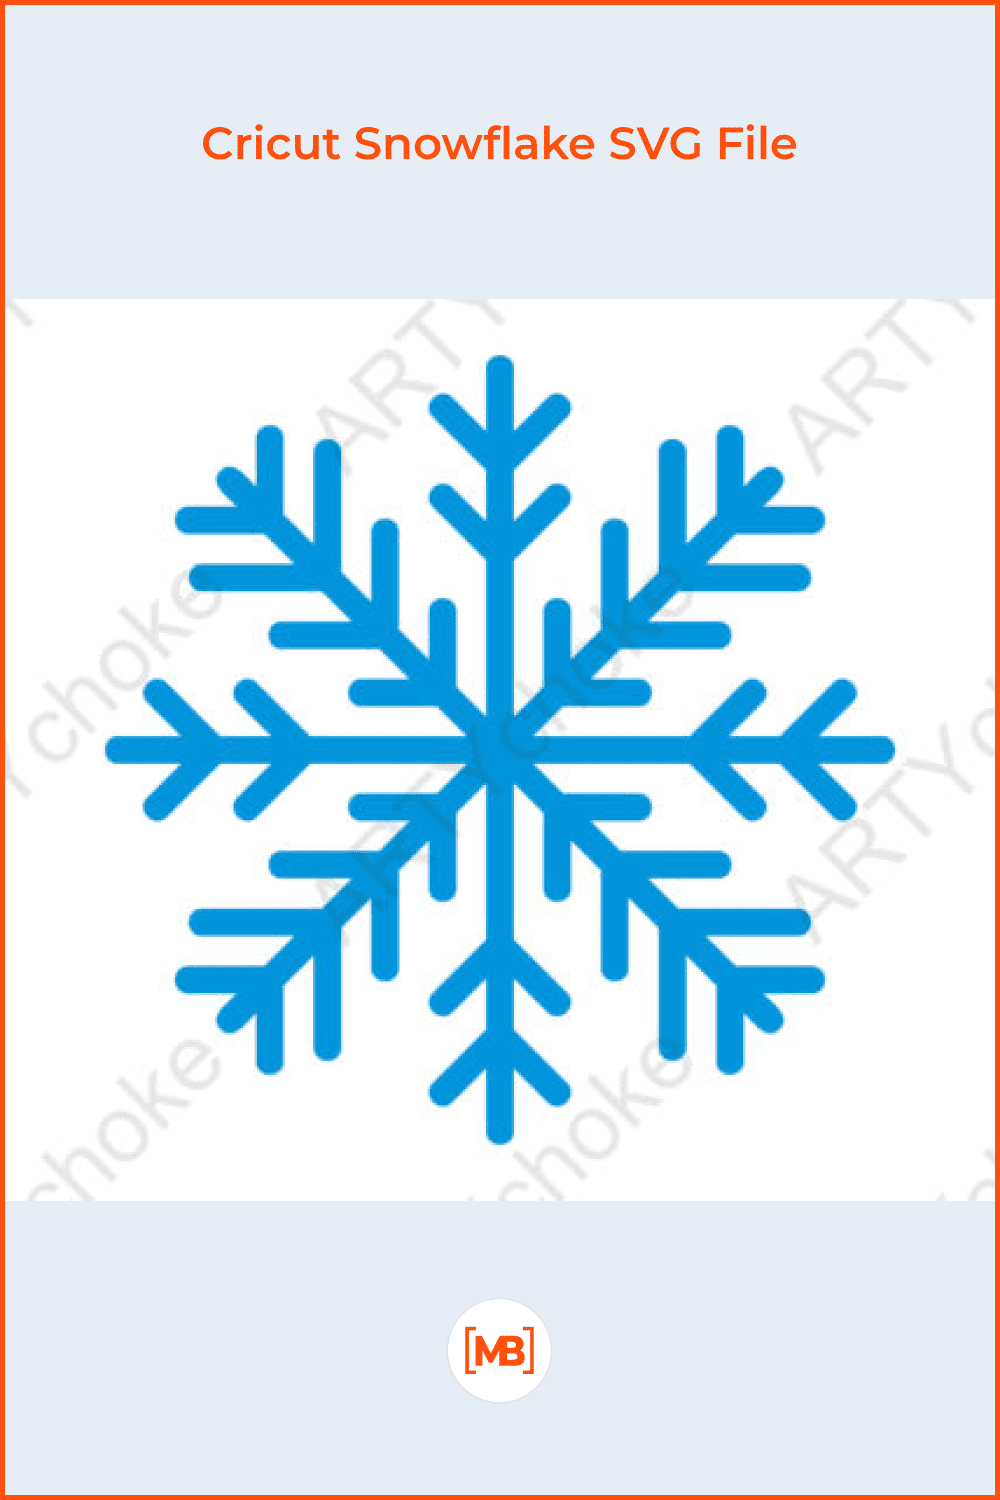 Cricut Snowflake SVG File.